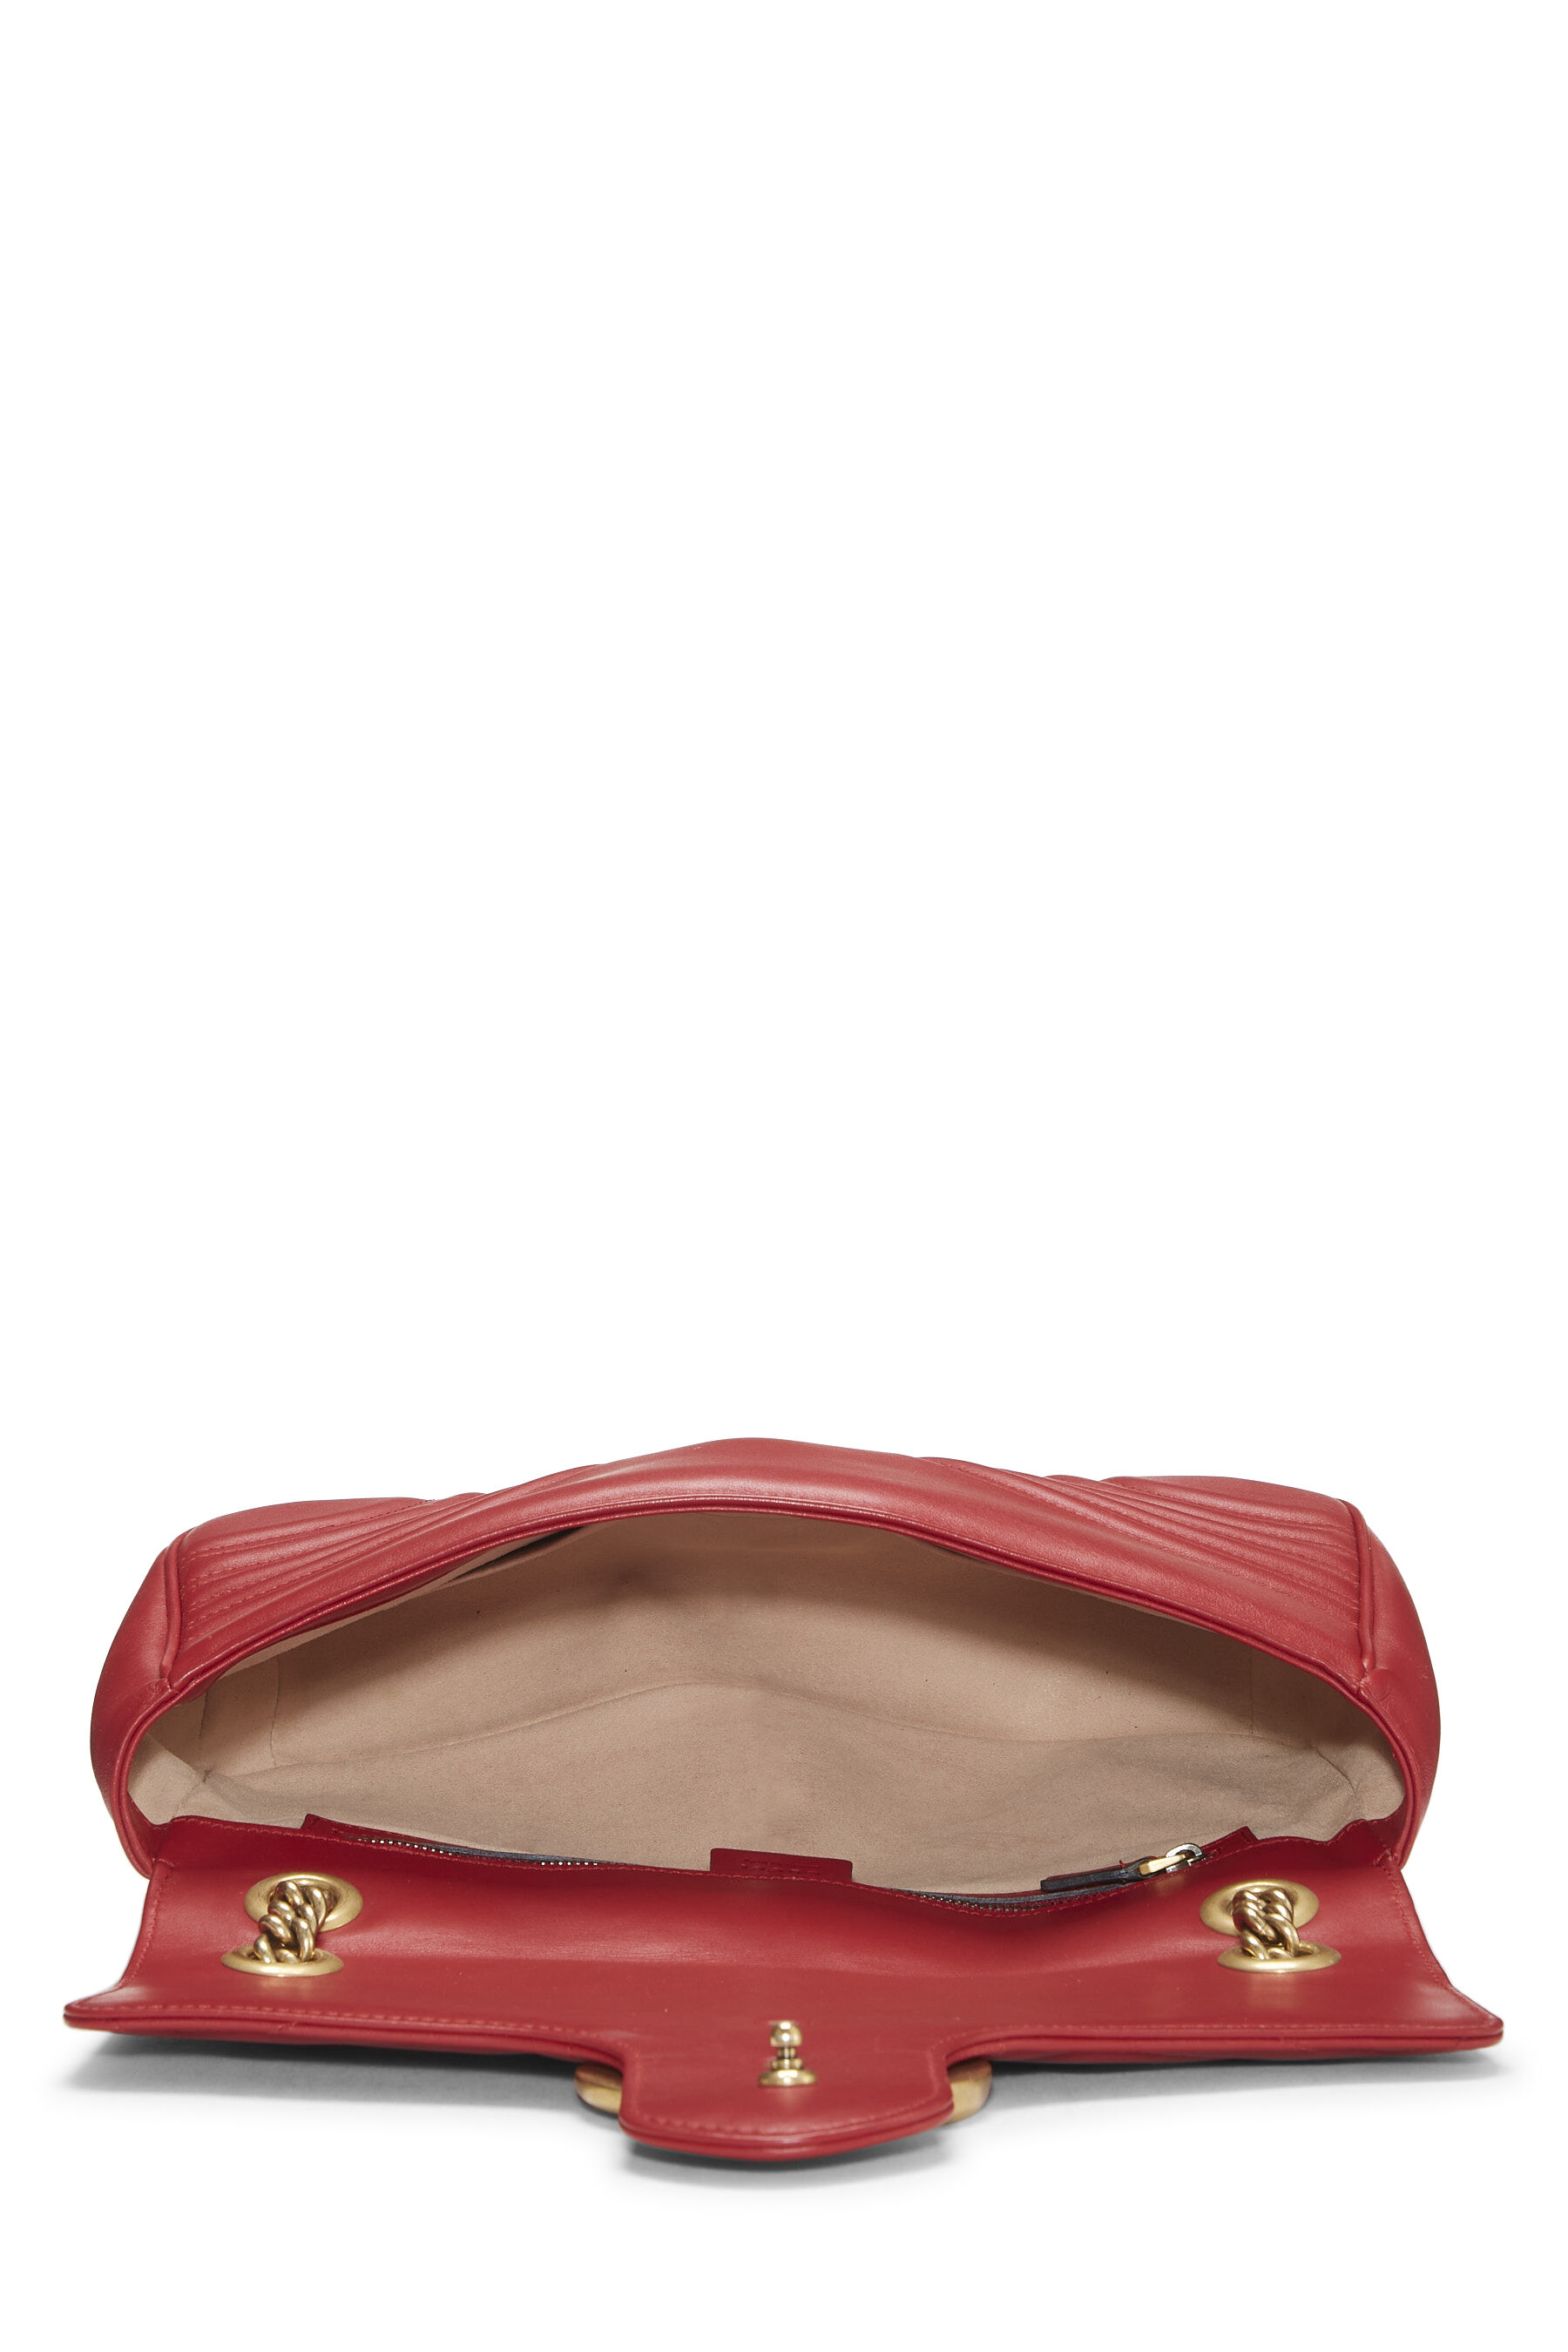 Red Leather GG Marmont Shoulder Bag